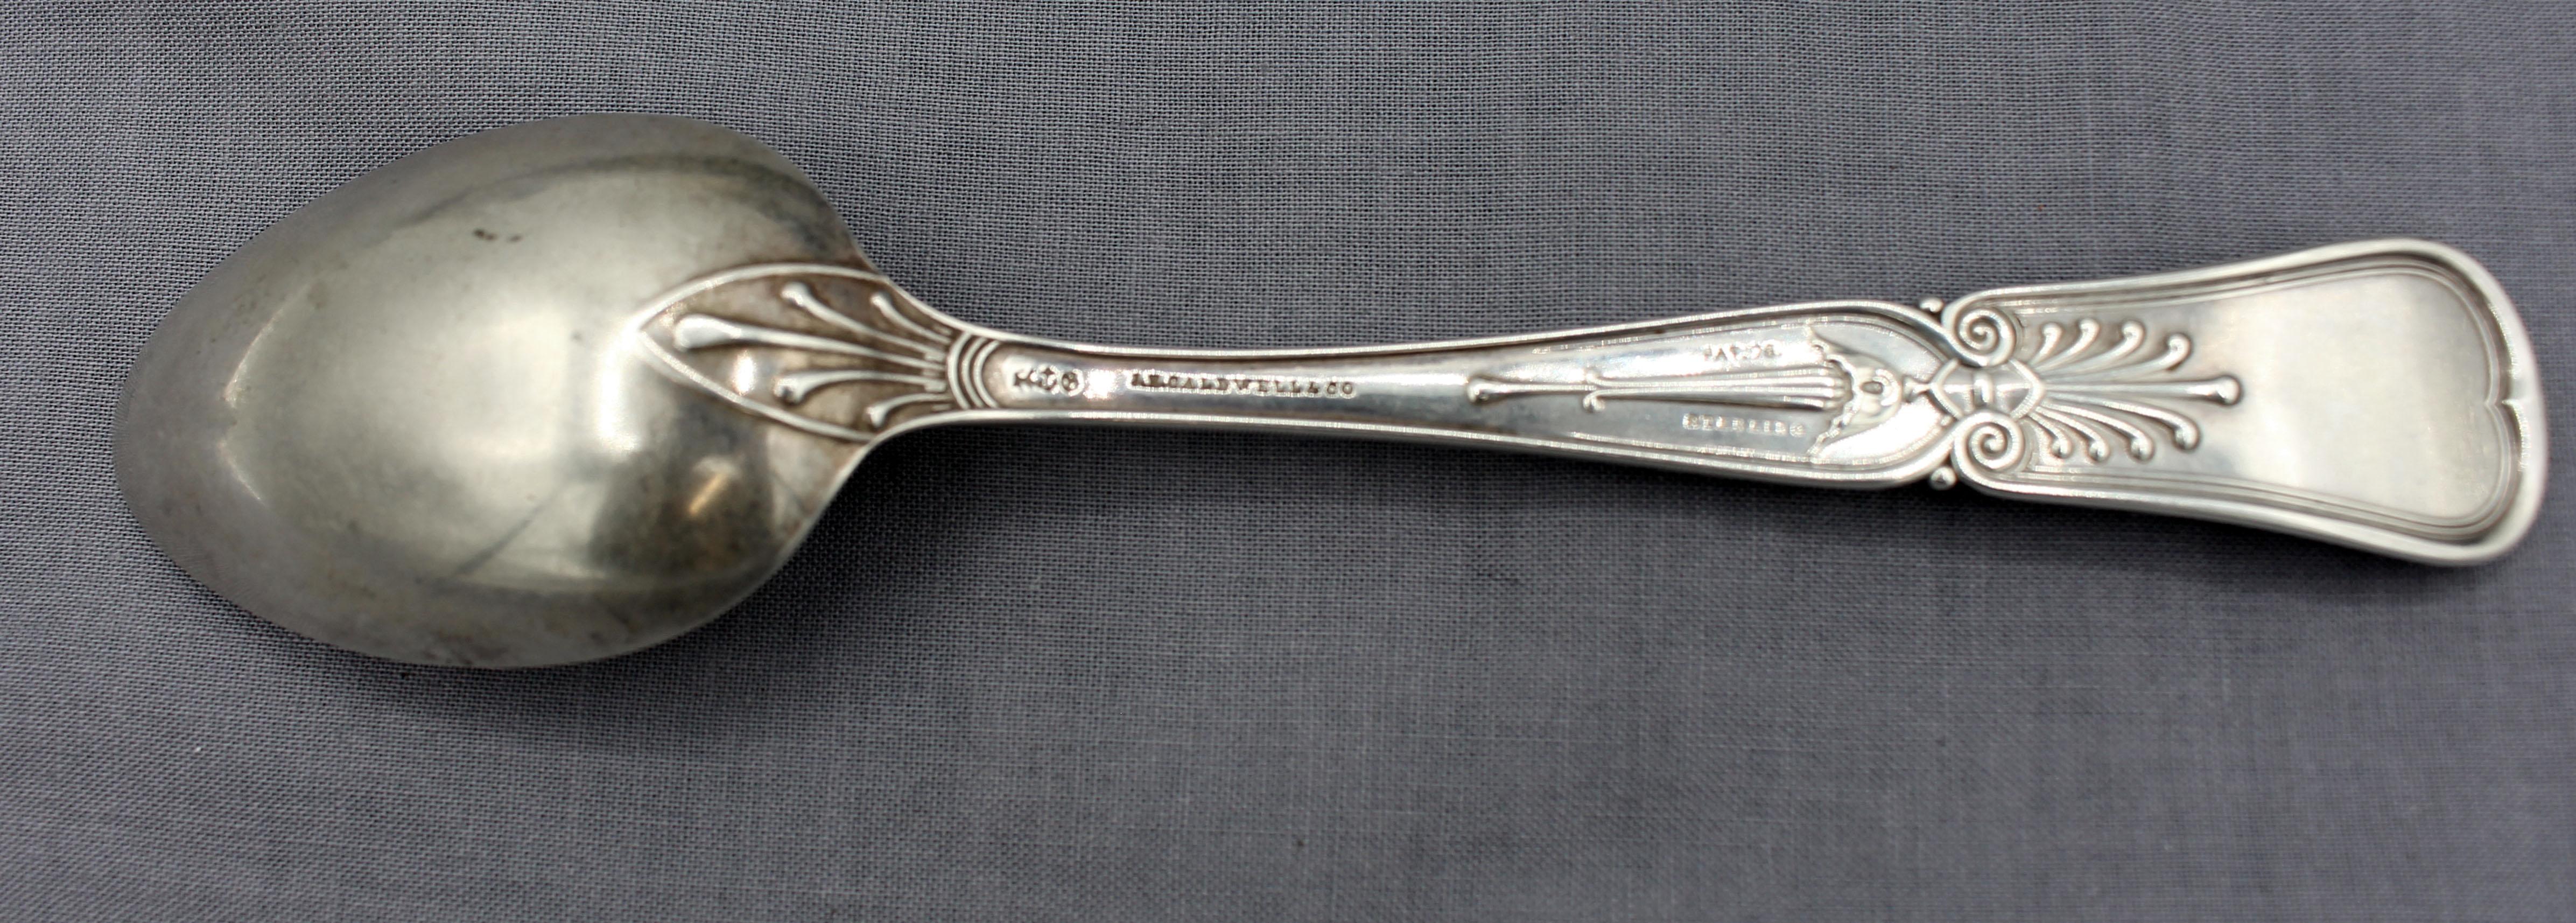 antique silver dessert spoons